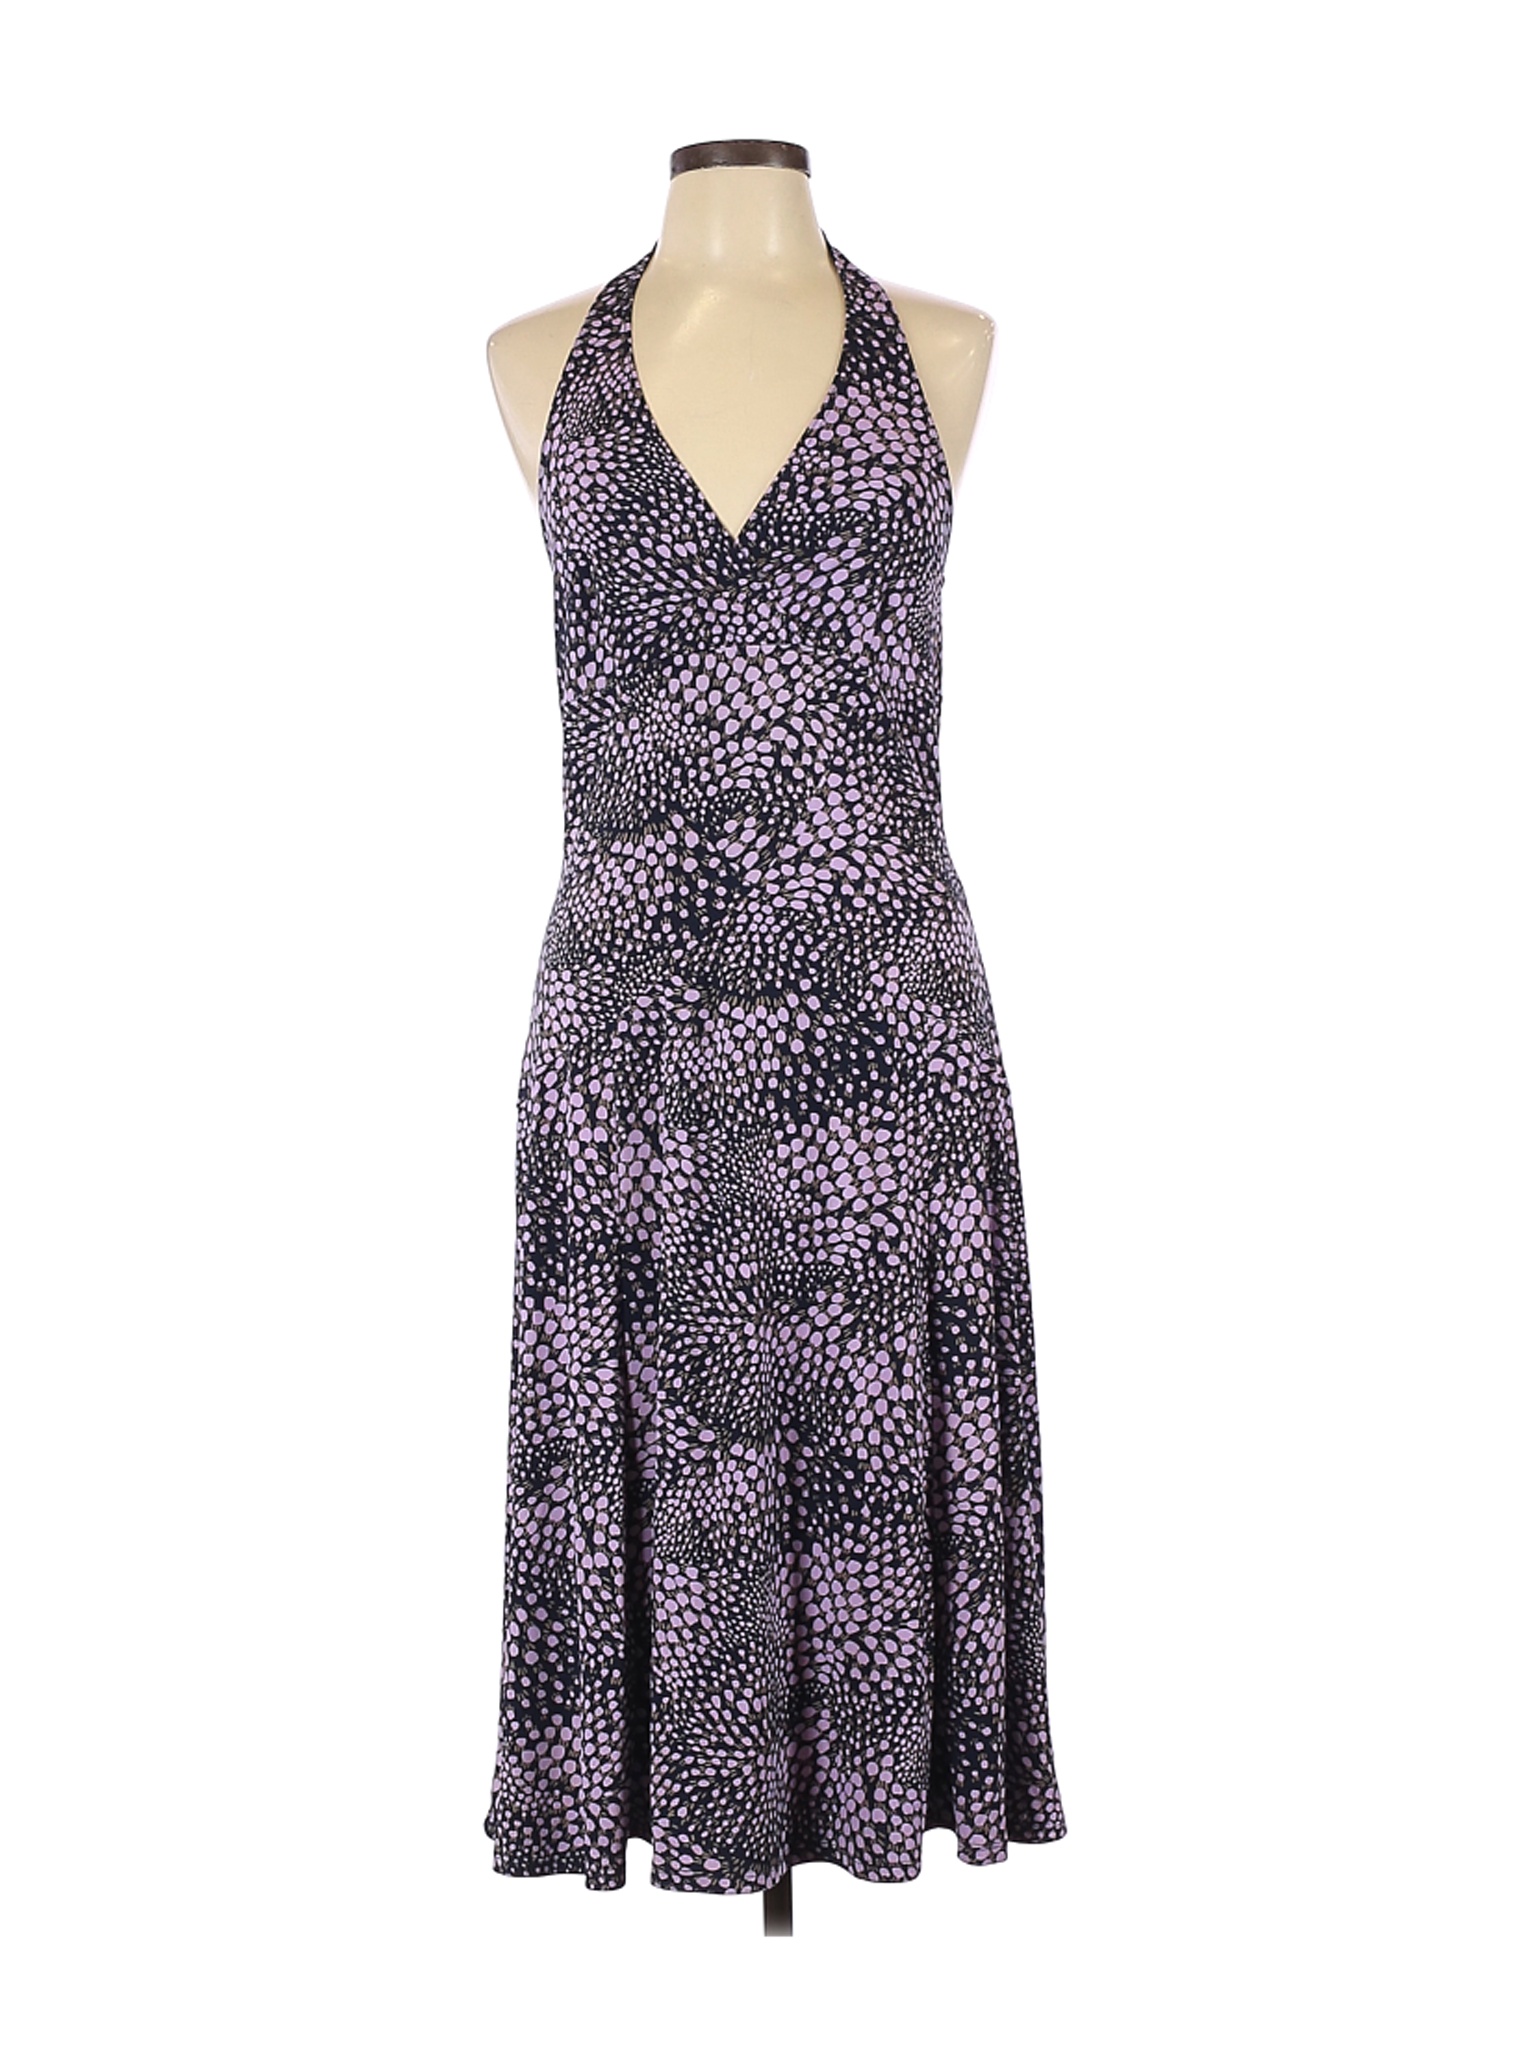 NWT BCBG Paris Women Purple Casual Dress L | eBay